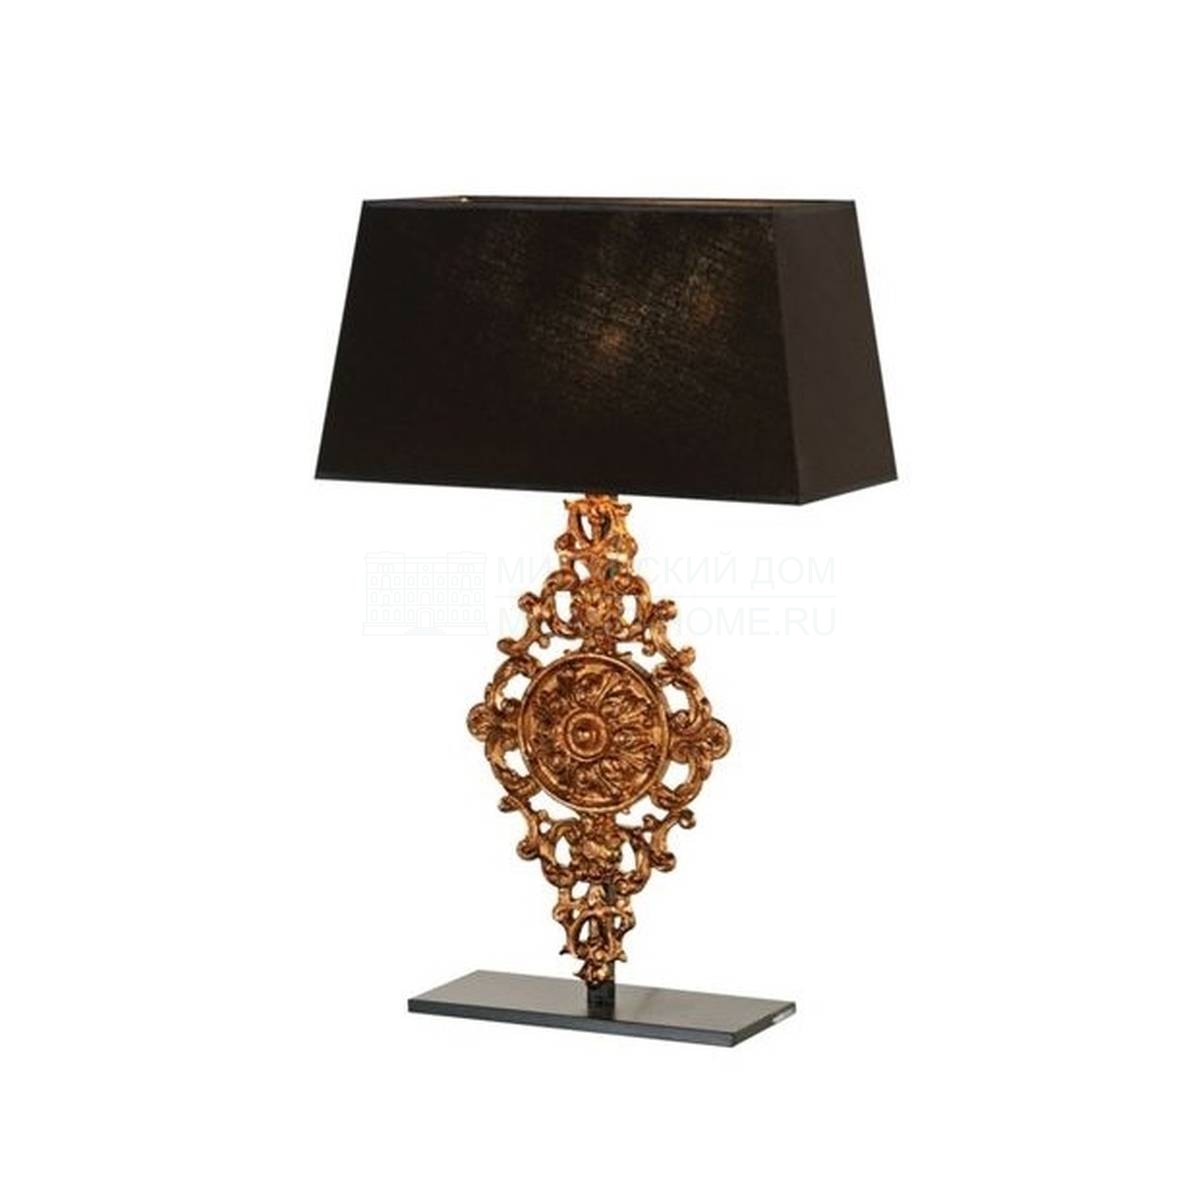 Настольная лампа Galice table lamp из Франции фабрики ROCHE BOBOIS